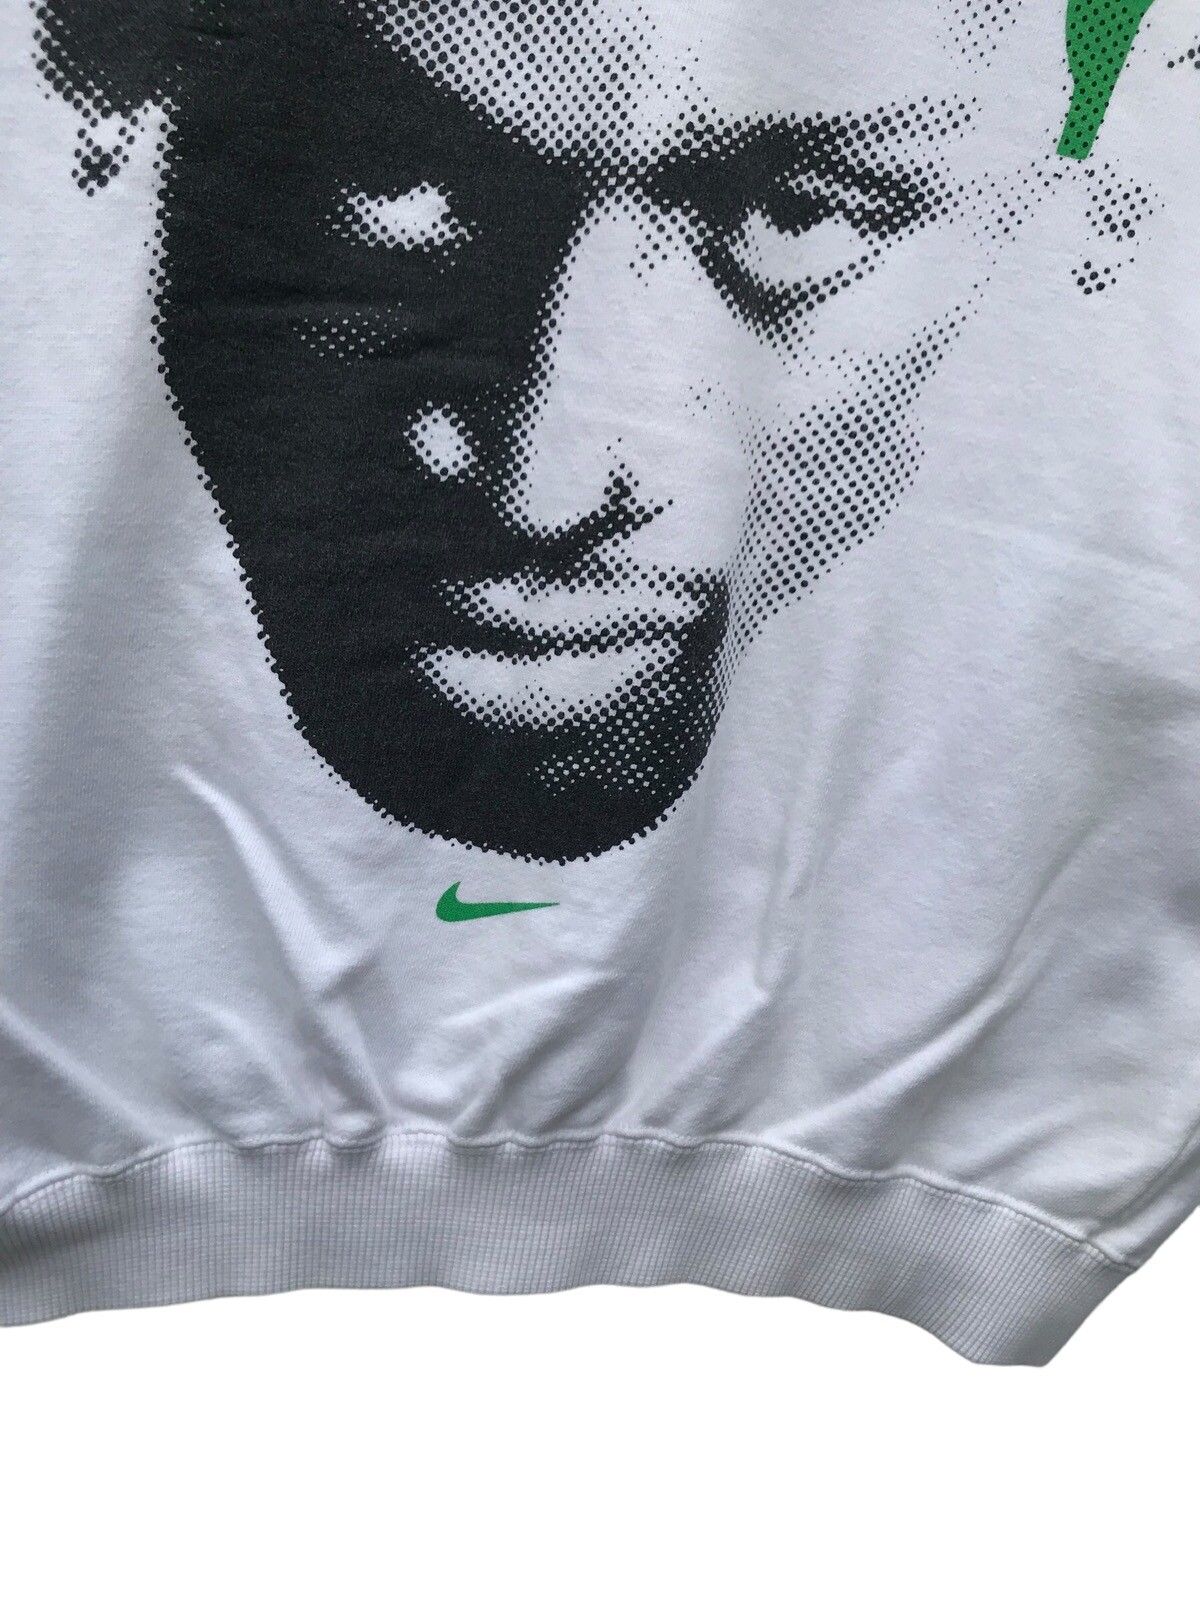 Nike Vintage Nike Dennis Rodman Basketball Sweatshirt Size US M / EU 48-50 / 2 - 10 Thumbnail